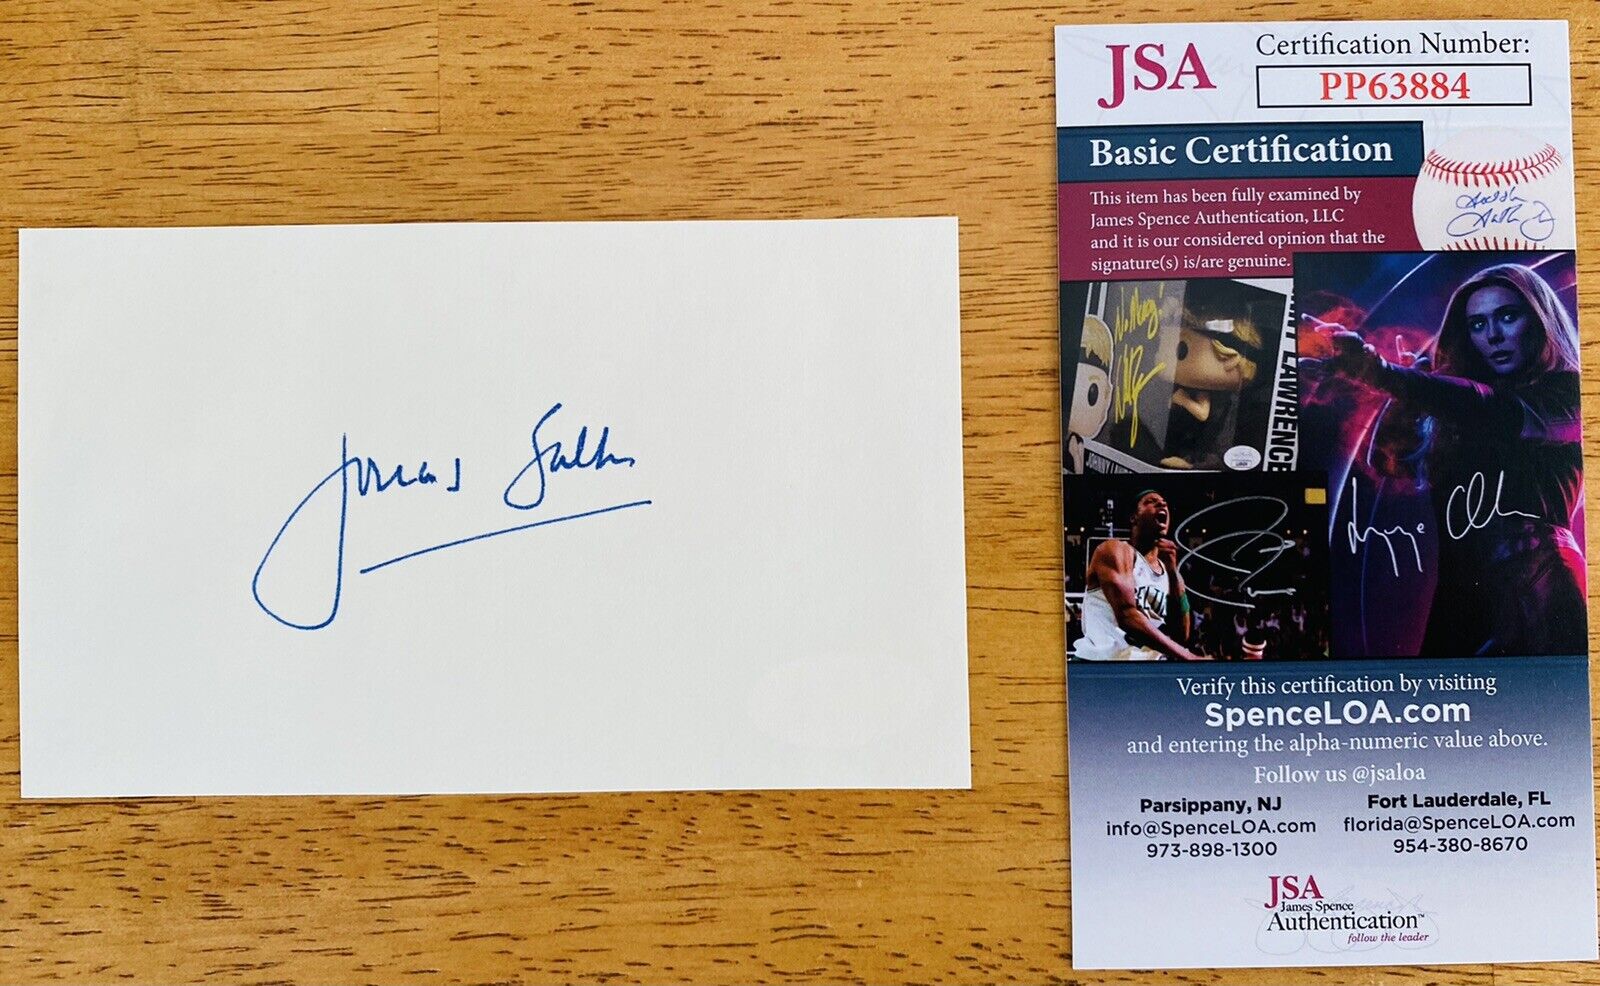 Jonas Salk Signed Autographed 3x5 Card JSA Certified Polio Vaccine Scientist